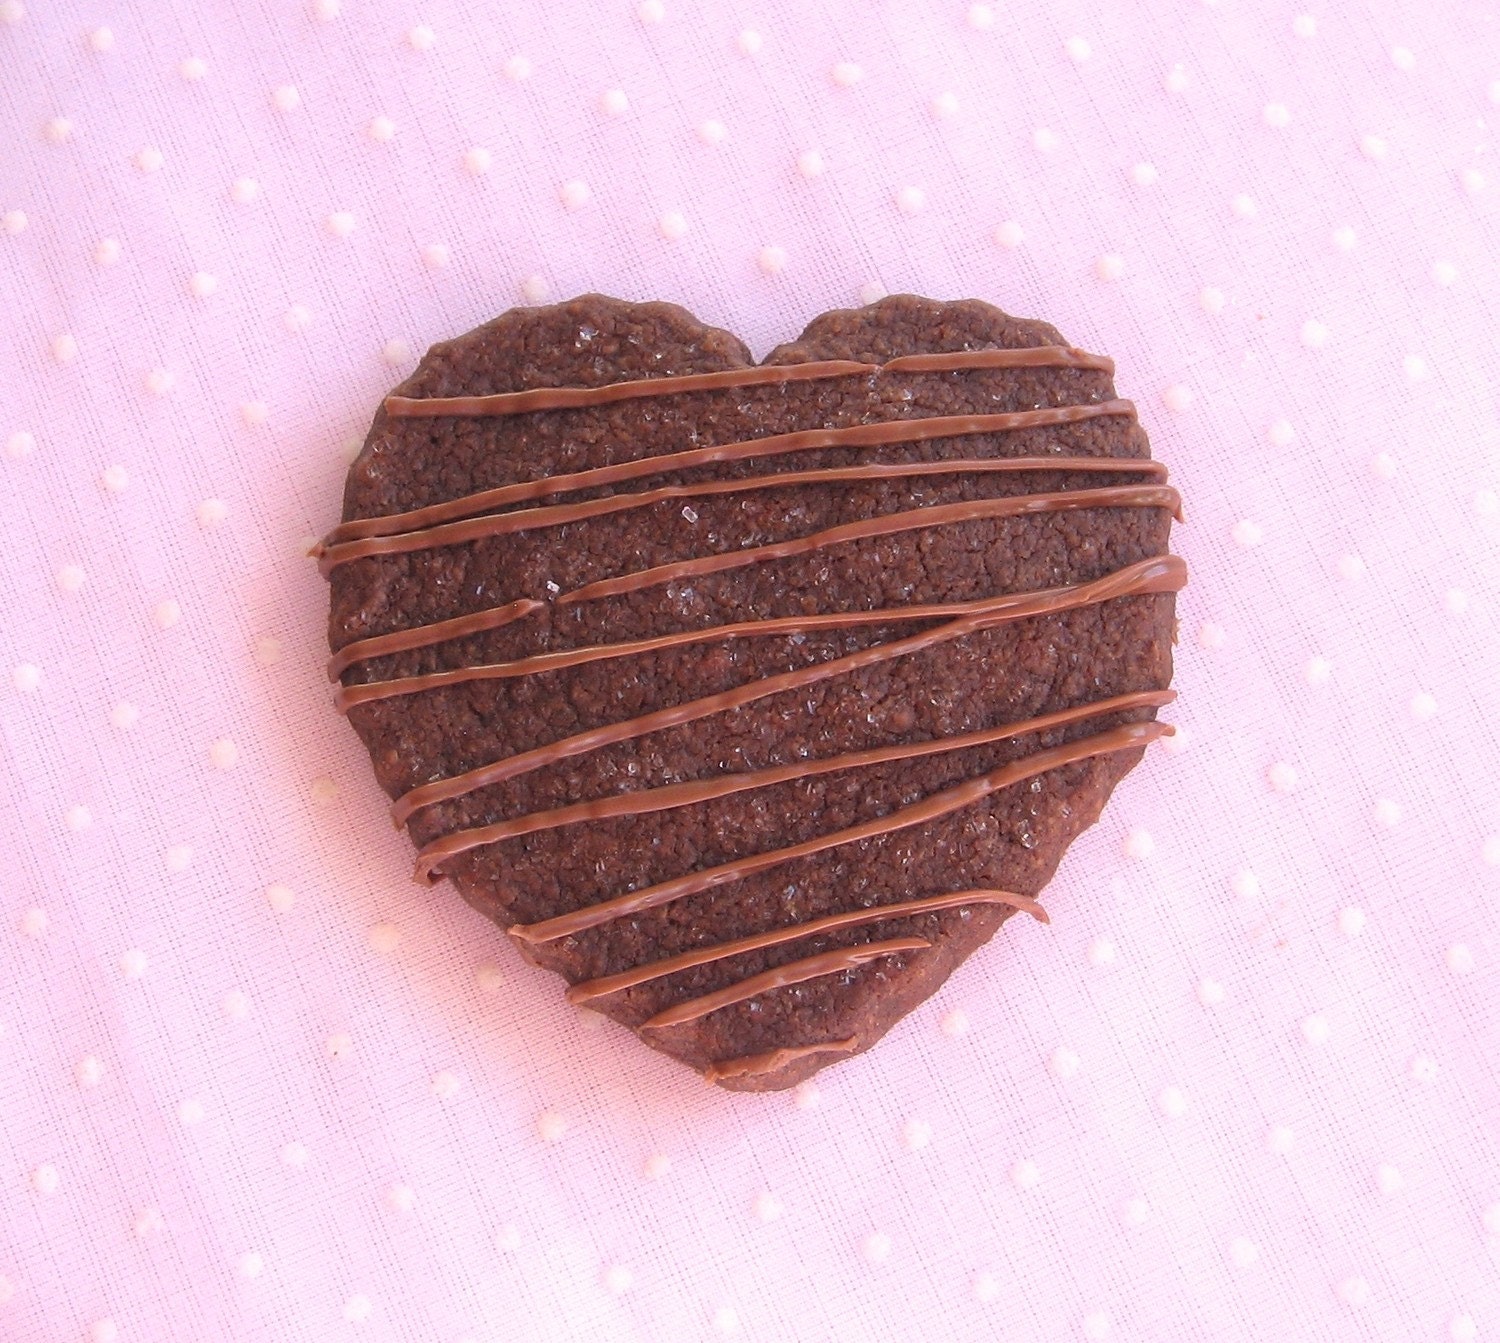 Chocolate Mocha Heart Shortbread Cookies - a Treasury item